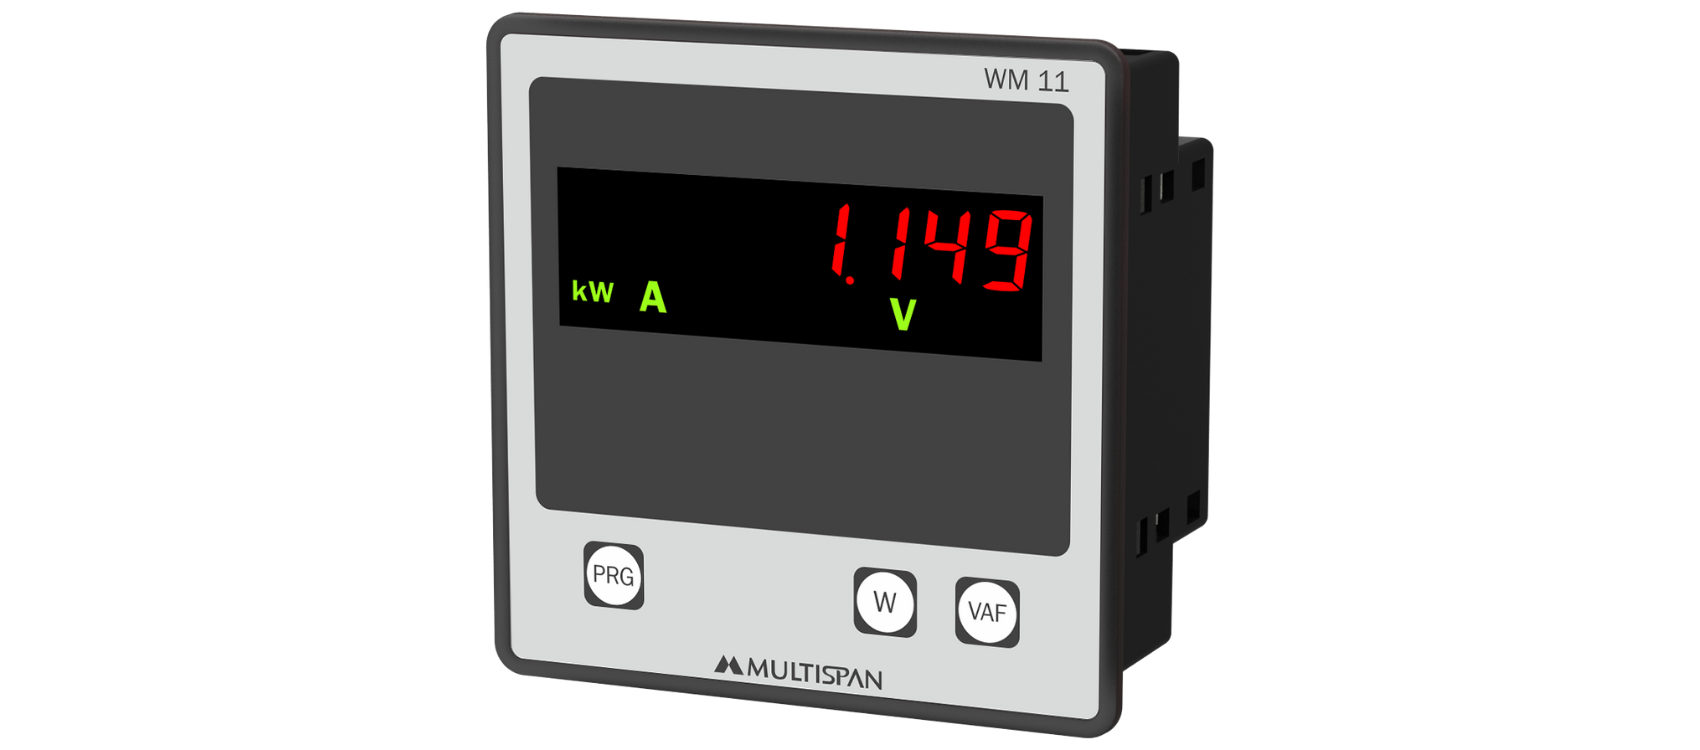 WM-11 - Kw Meter - product image